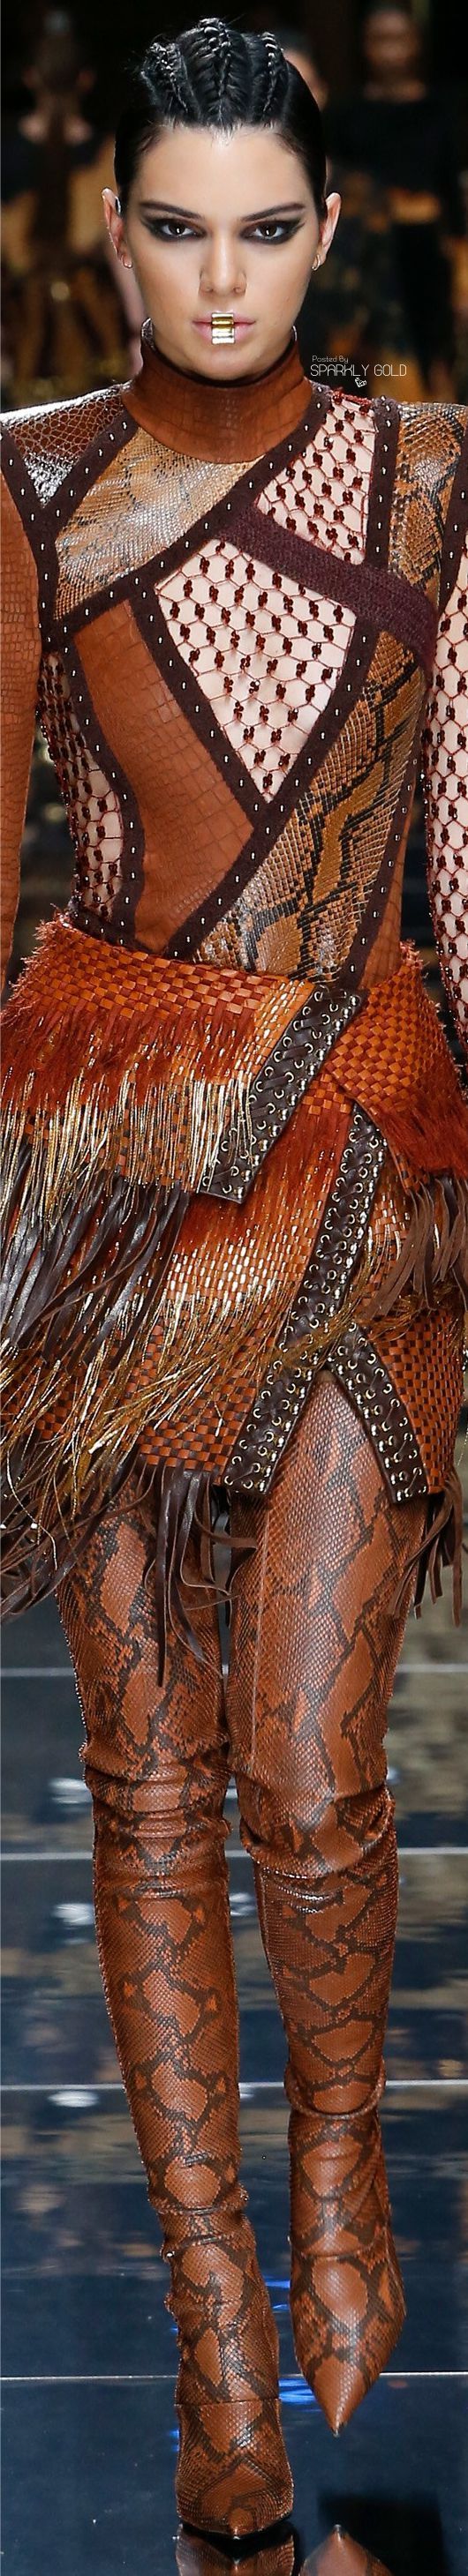 Snakeskin dress with fringe